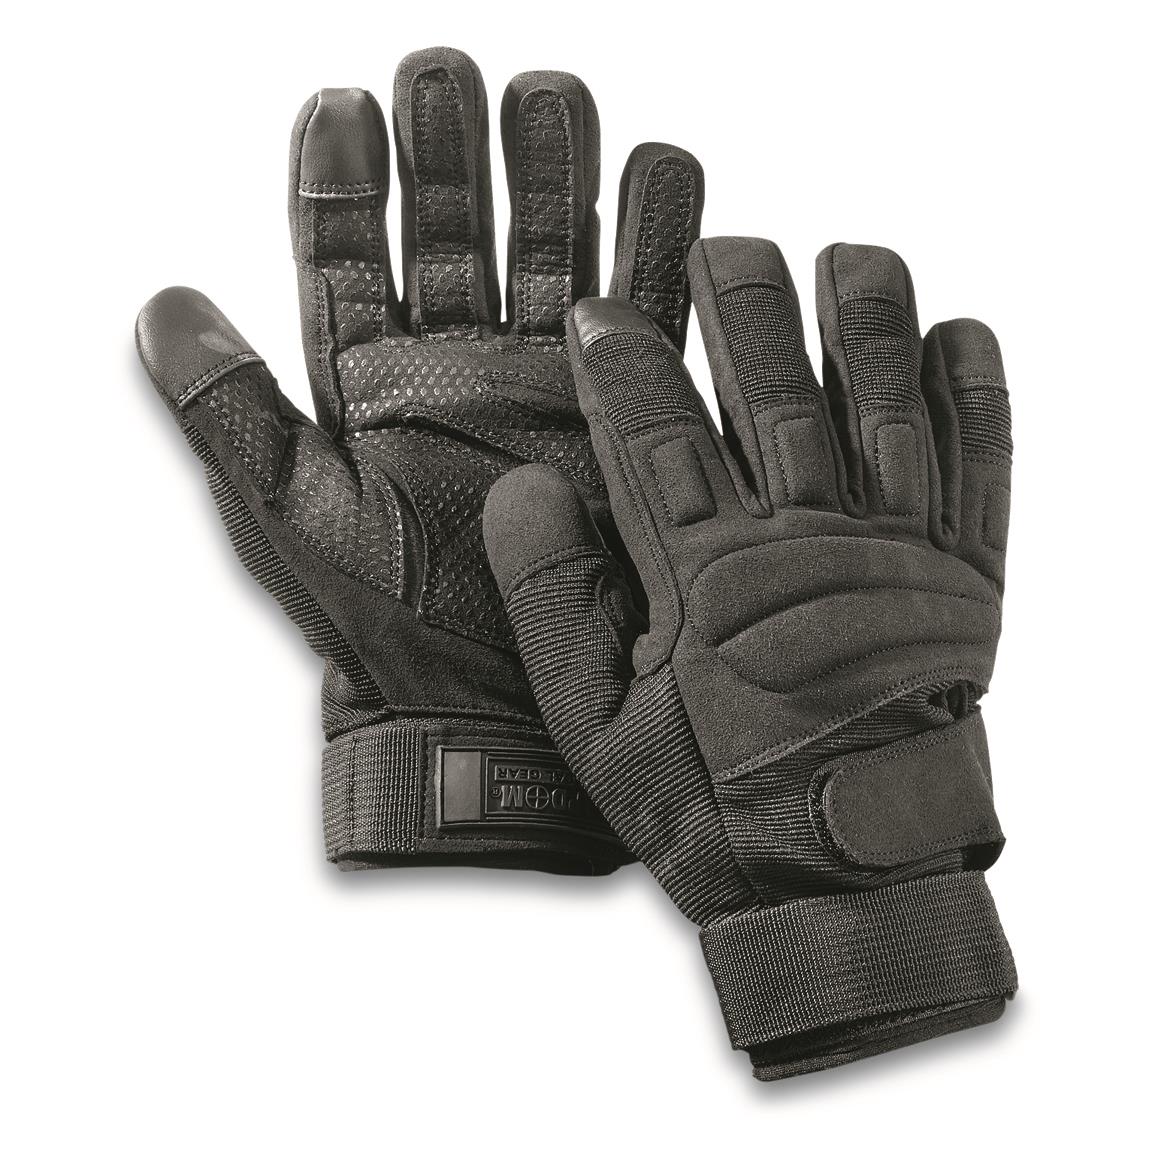 Rapid Dominance Lightweight Tactical Gloves, Black